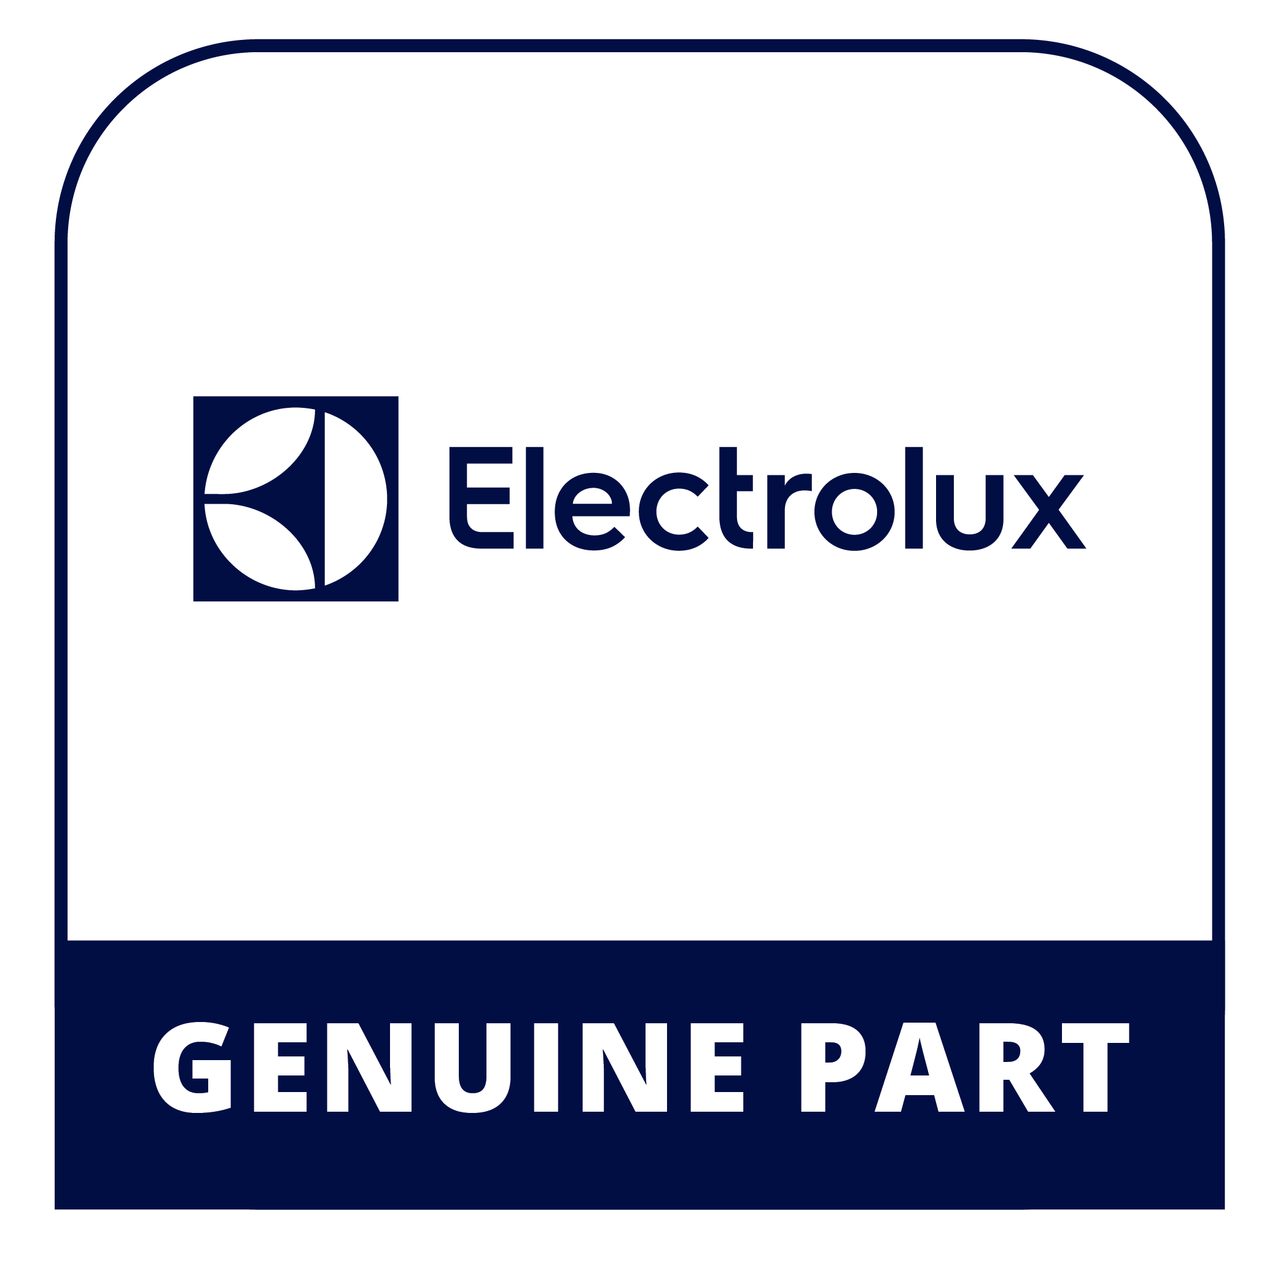 Frigidaire - Electrolux 316419382 Overlay - Genuine Electrolux Part